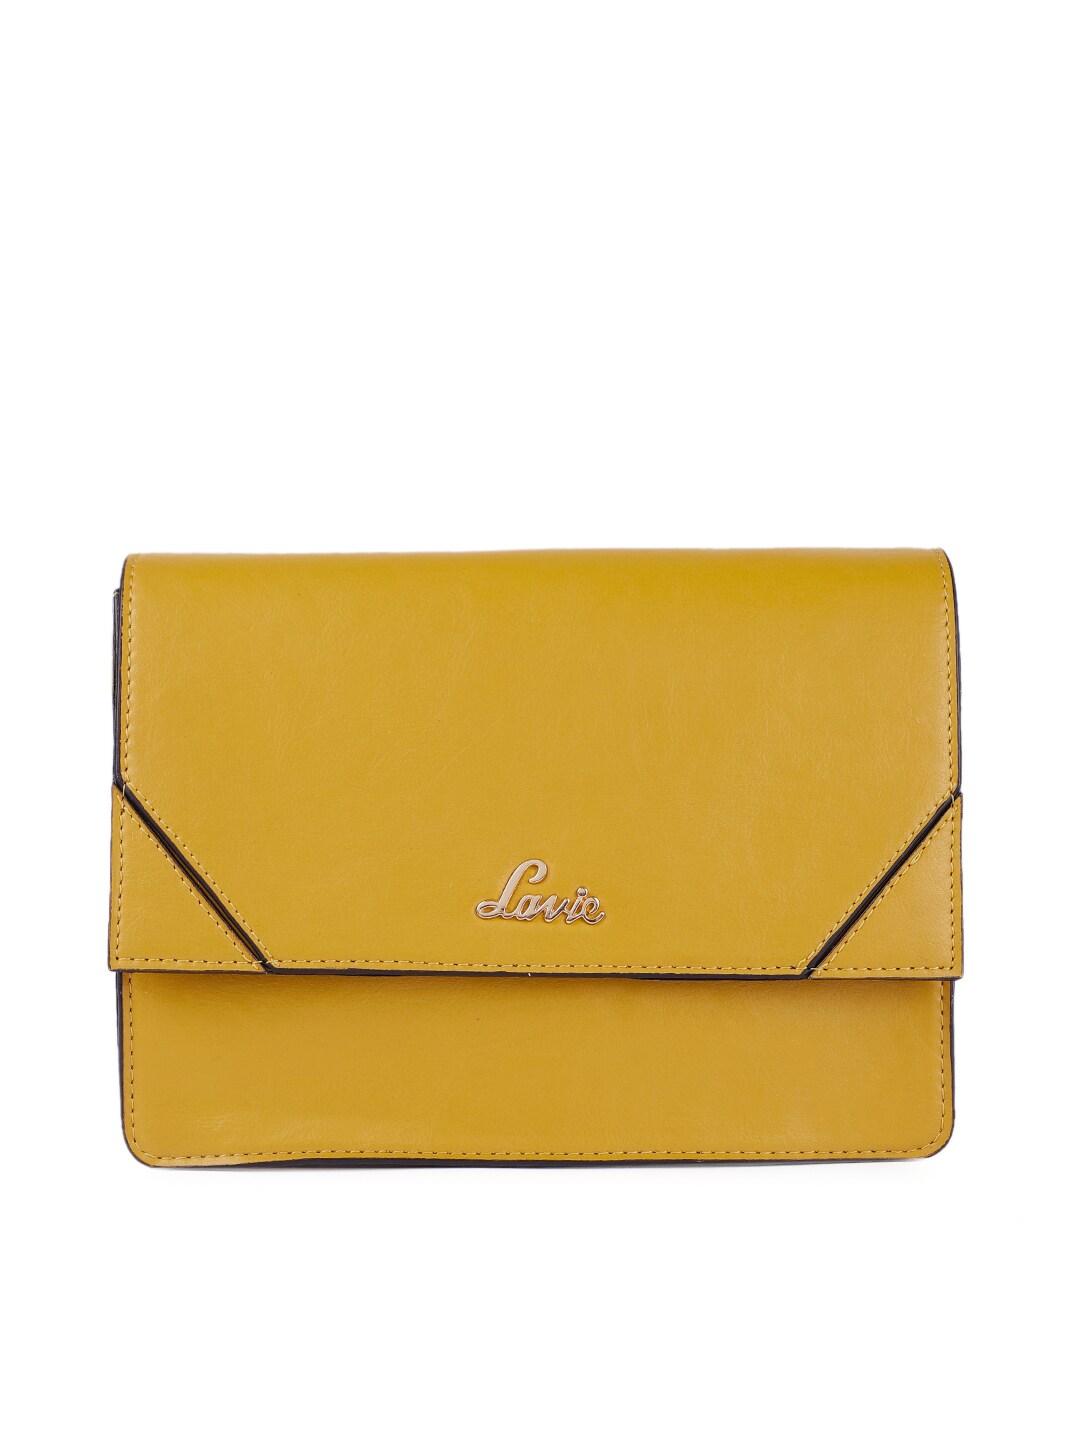 Lavie Mustard Yellow Solid Sling Bag